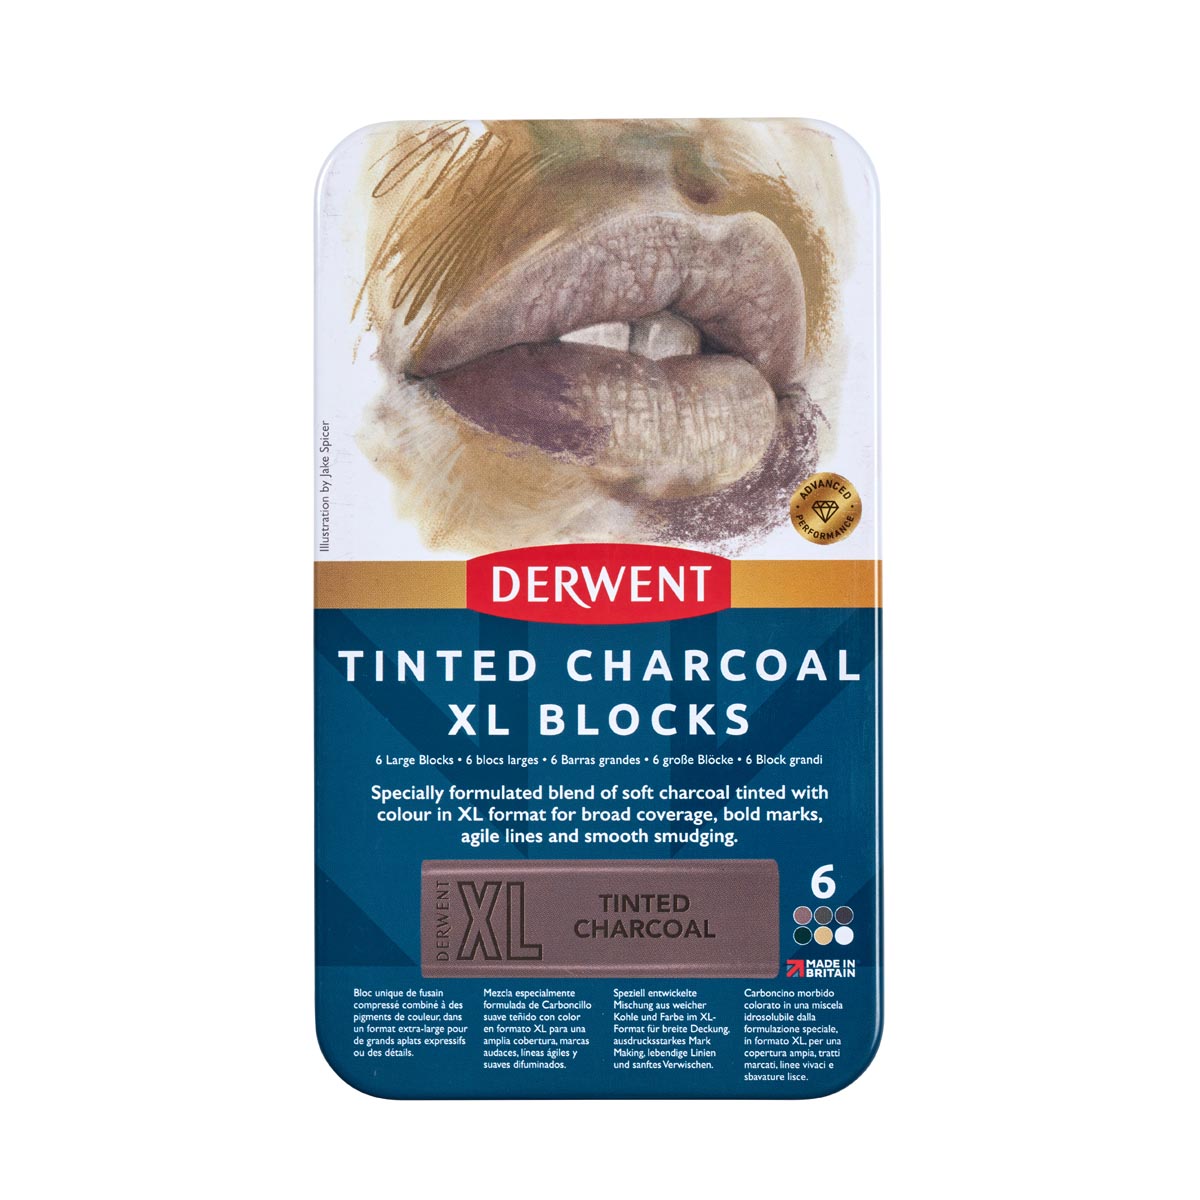 Derwent - Tinted Charcoal XL Blocks - 6 Tin